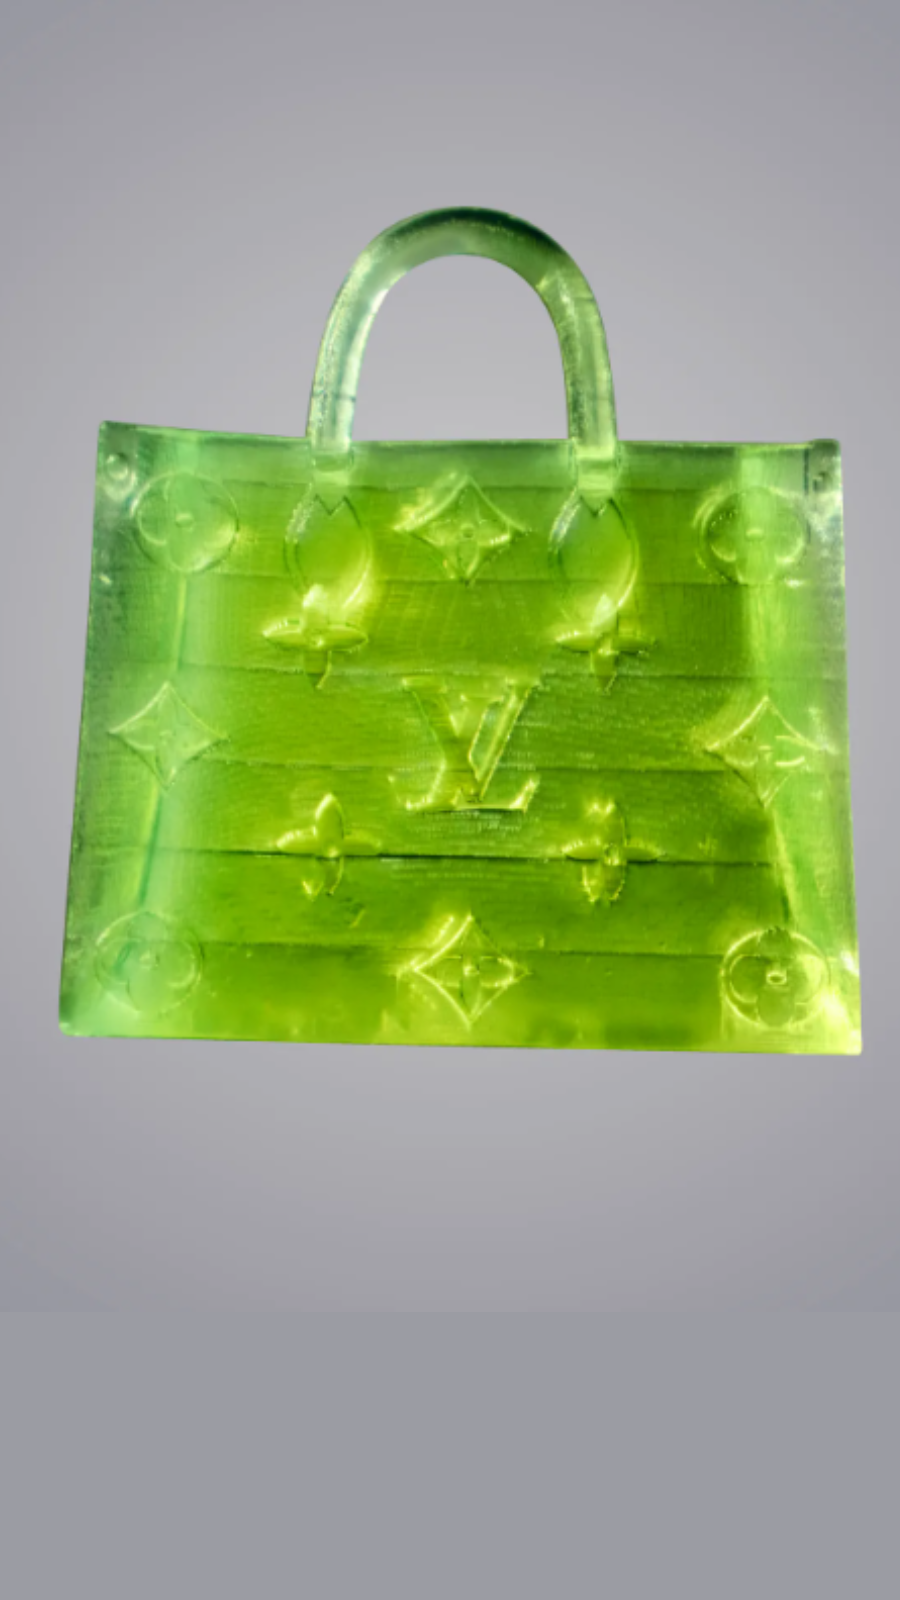 Bizarre fashion! Would you buy this MSCHF microscopic bag?